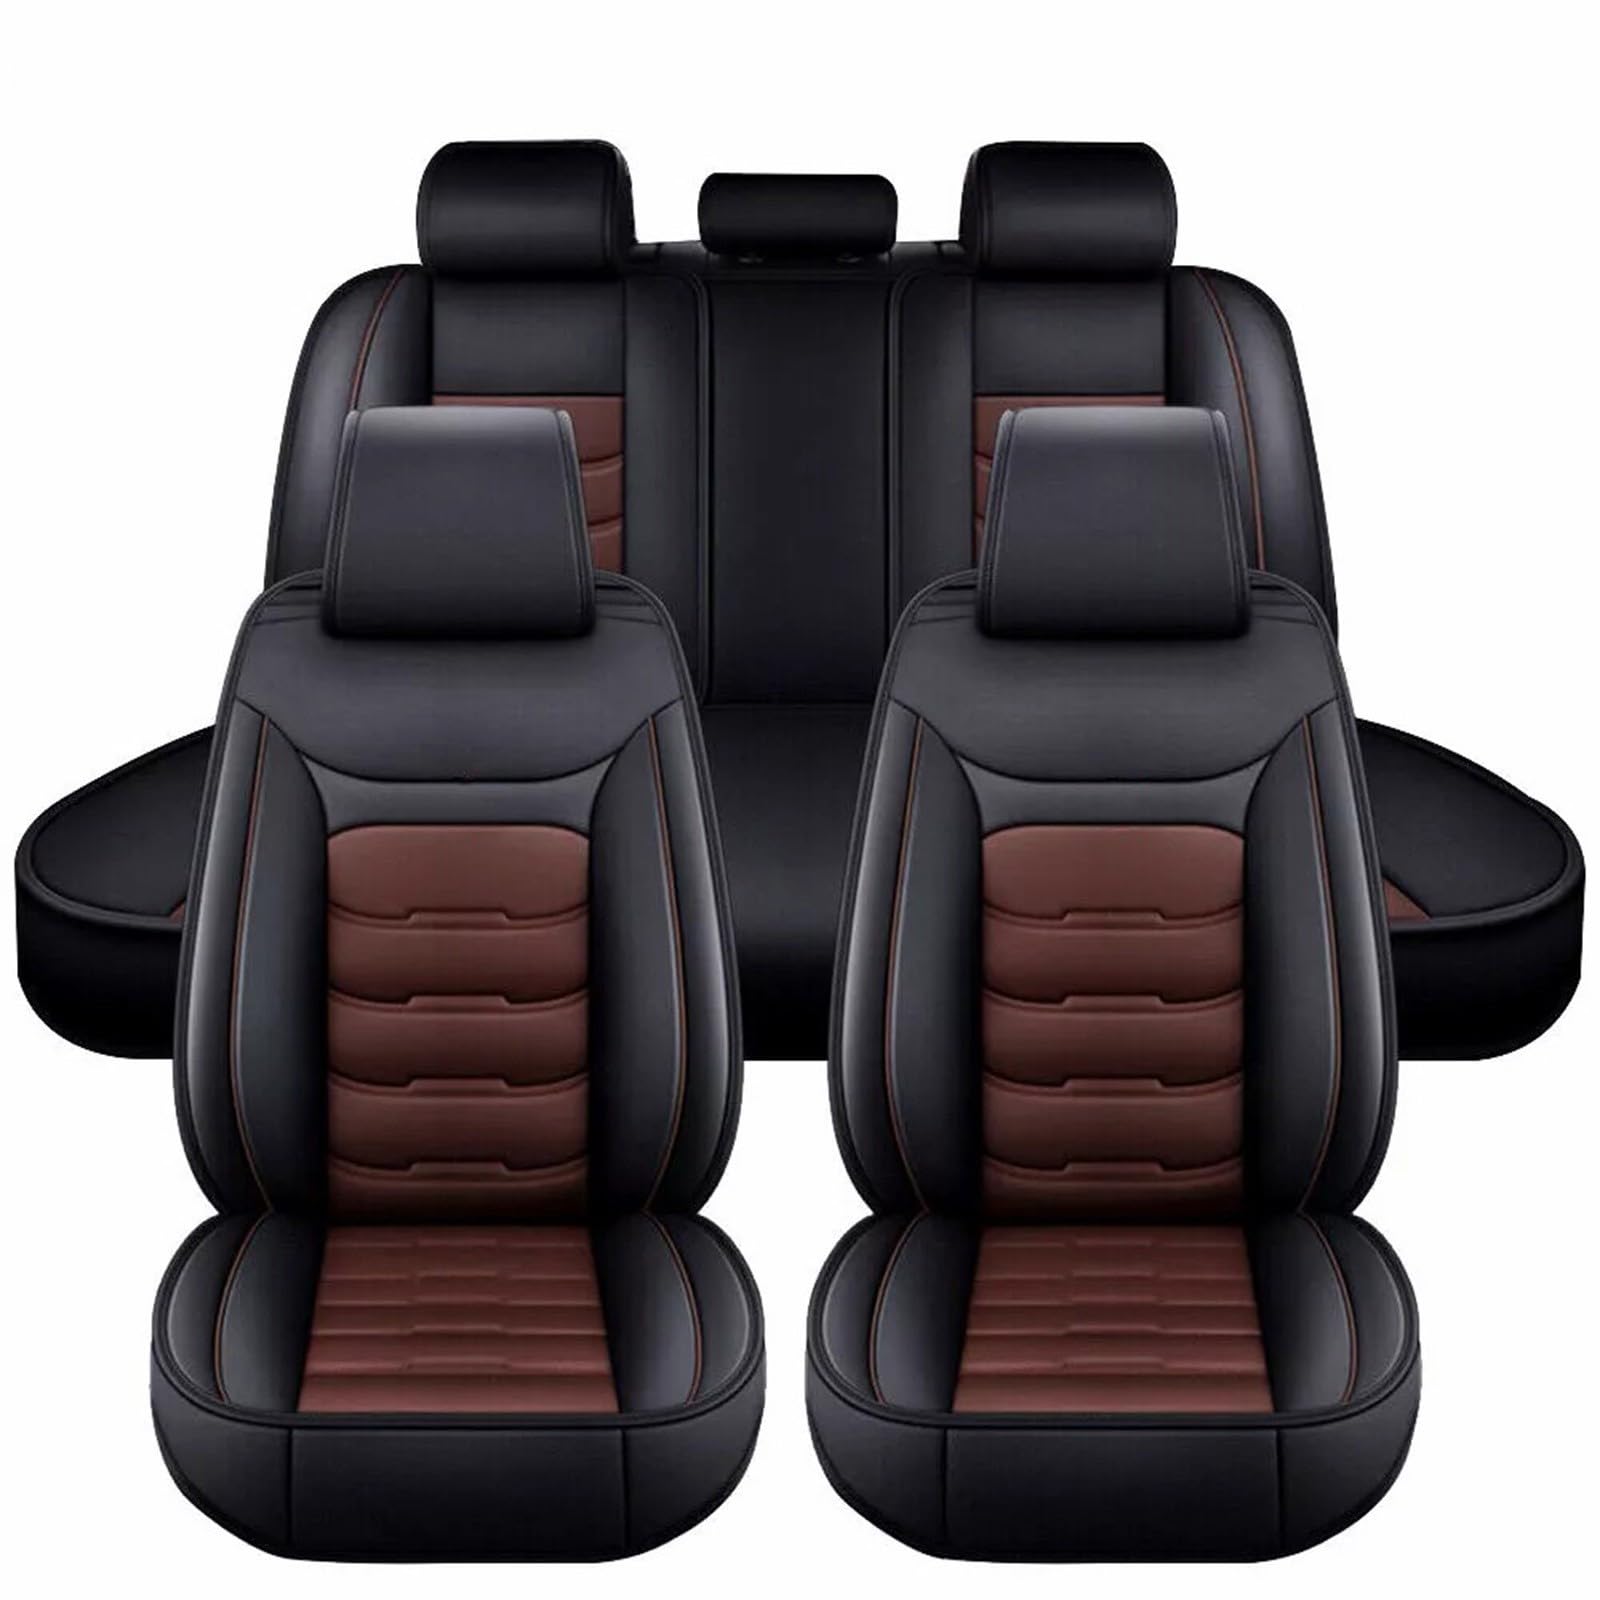 Full Set Auto Sitzbezüge für Audi RS4 (B7),Wasserdichtes VerschleißFest Leder Auto Sitzschutz,5 Stück Autositzbezüge von SePkus